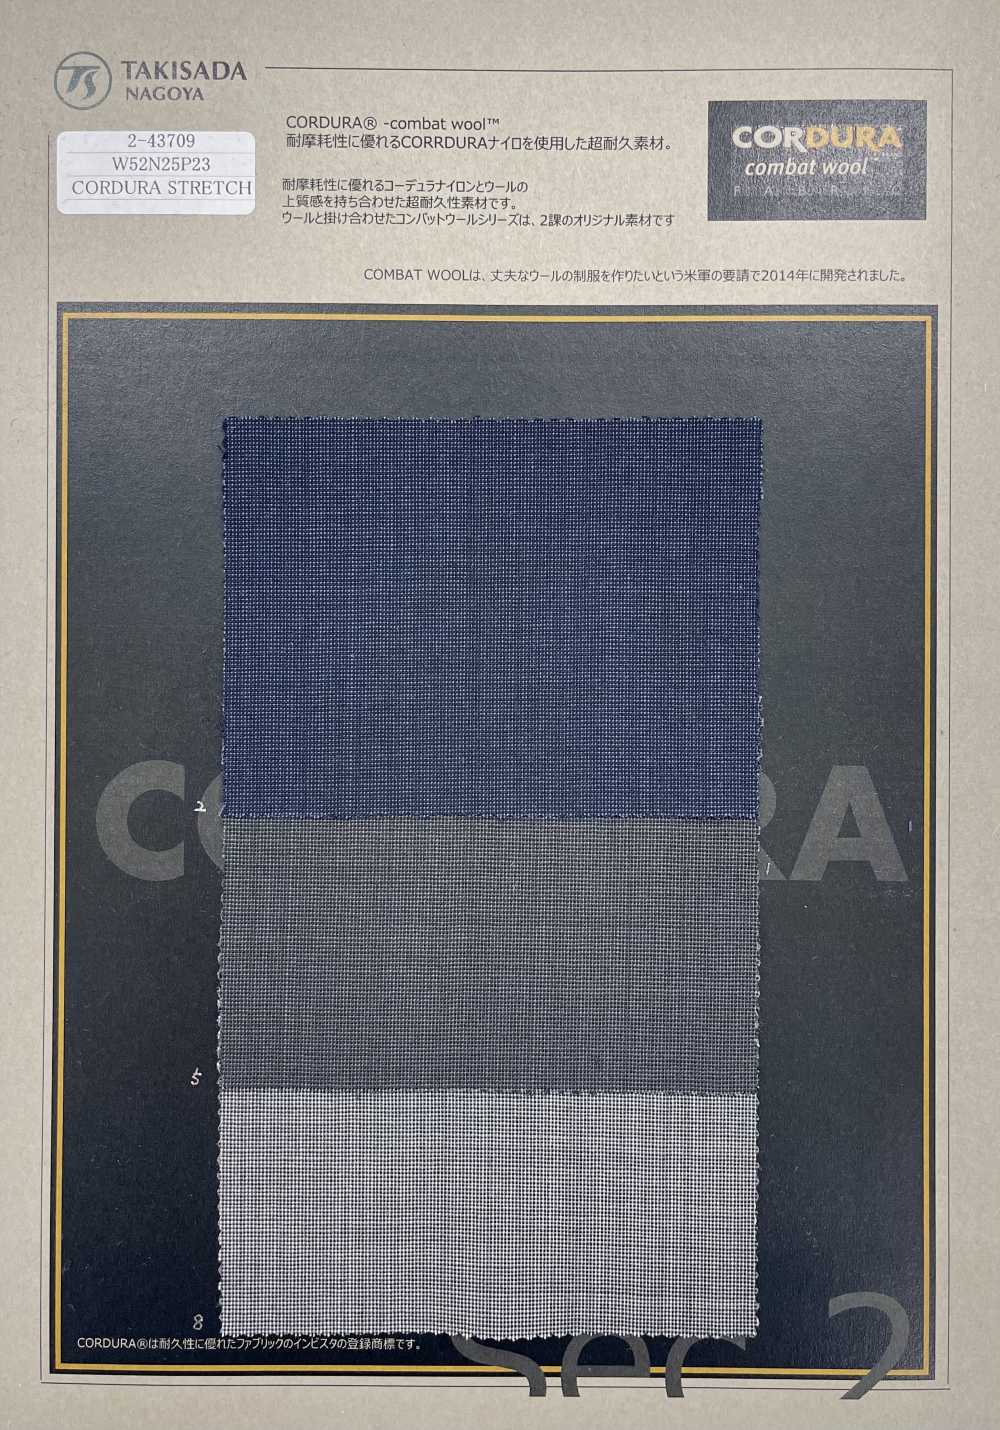 2-43709 Tête D&#39;épingle Tropicale CORDURA COMBATWOOL[Fabrication De Textile] Takisada Nagoya